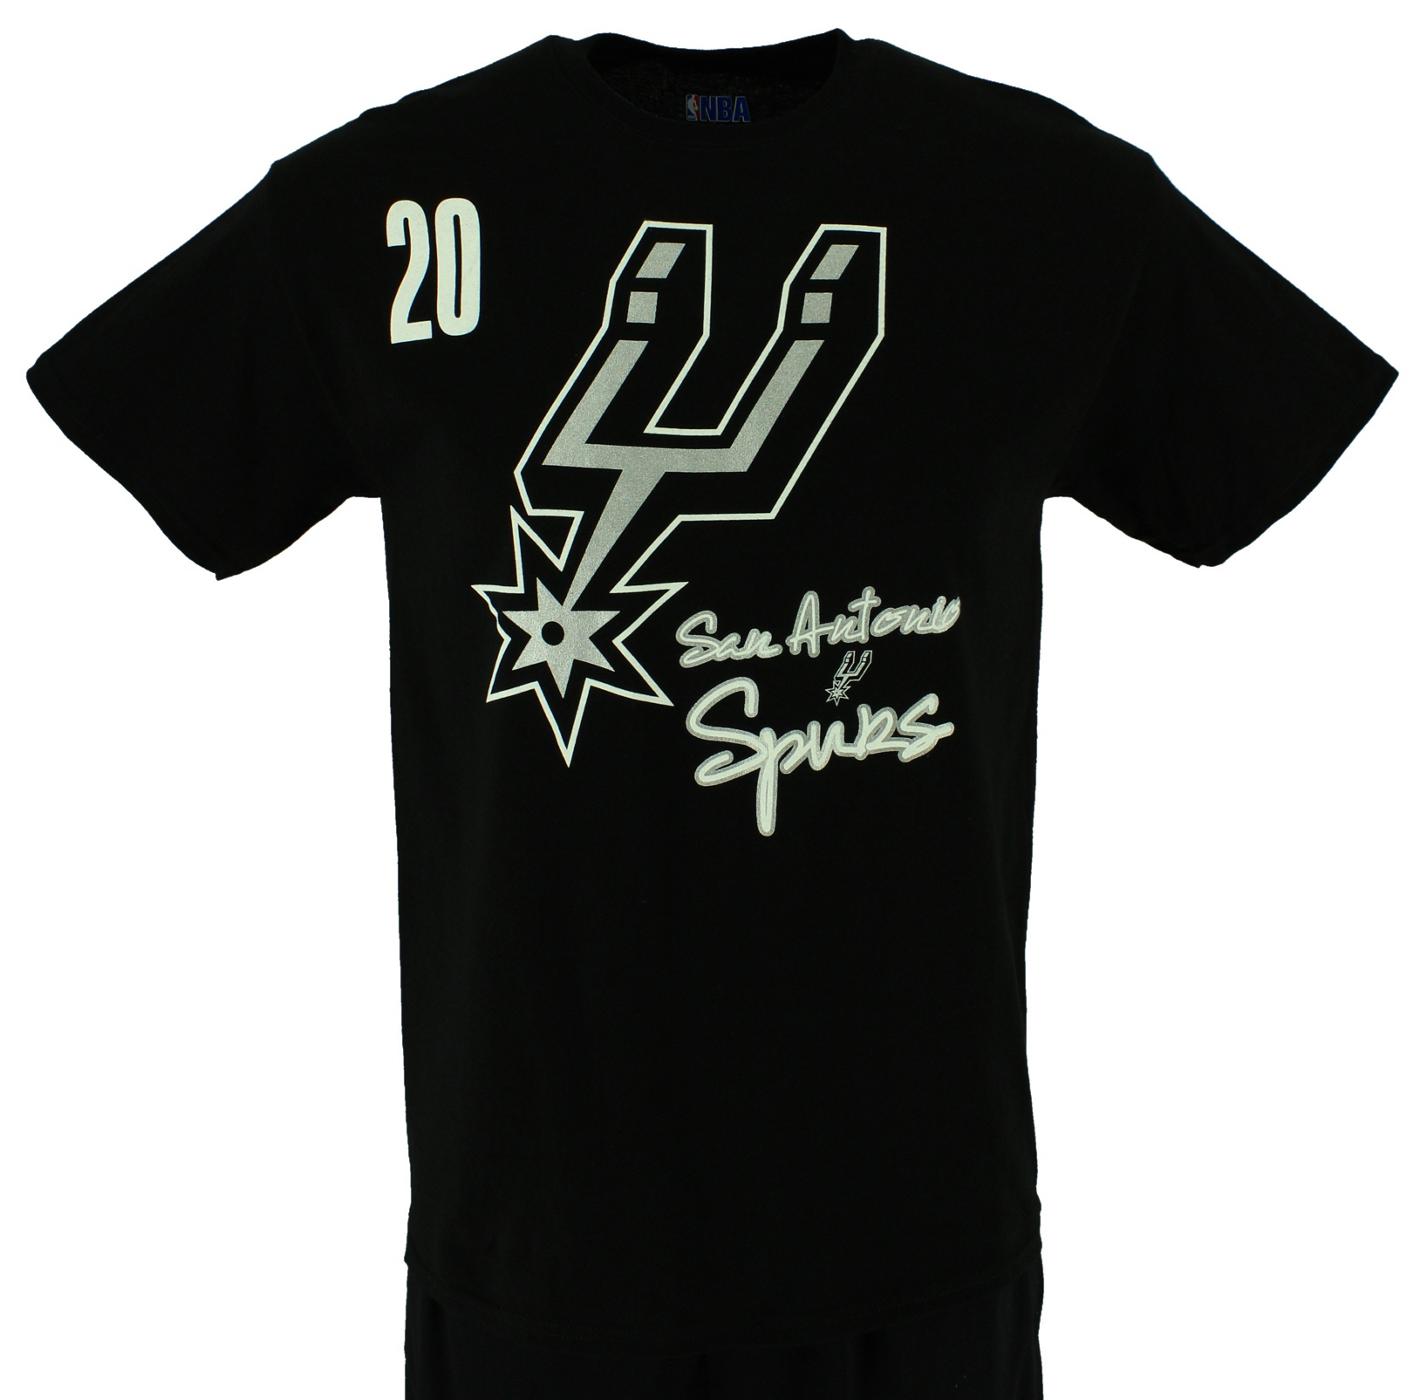 San Antonio Spurs Manu Ginobili Signature Men's Black Tee; image 1 of 2